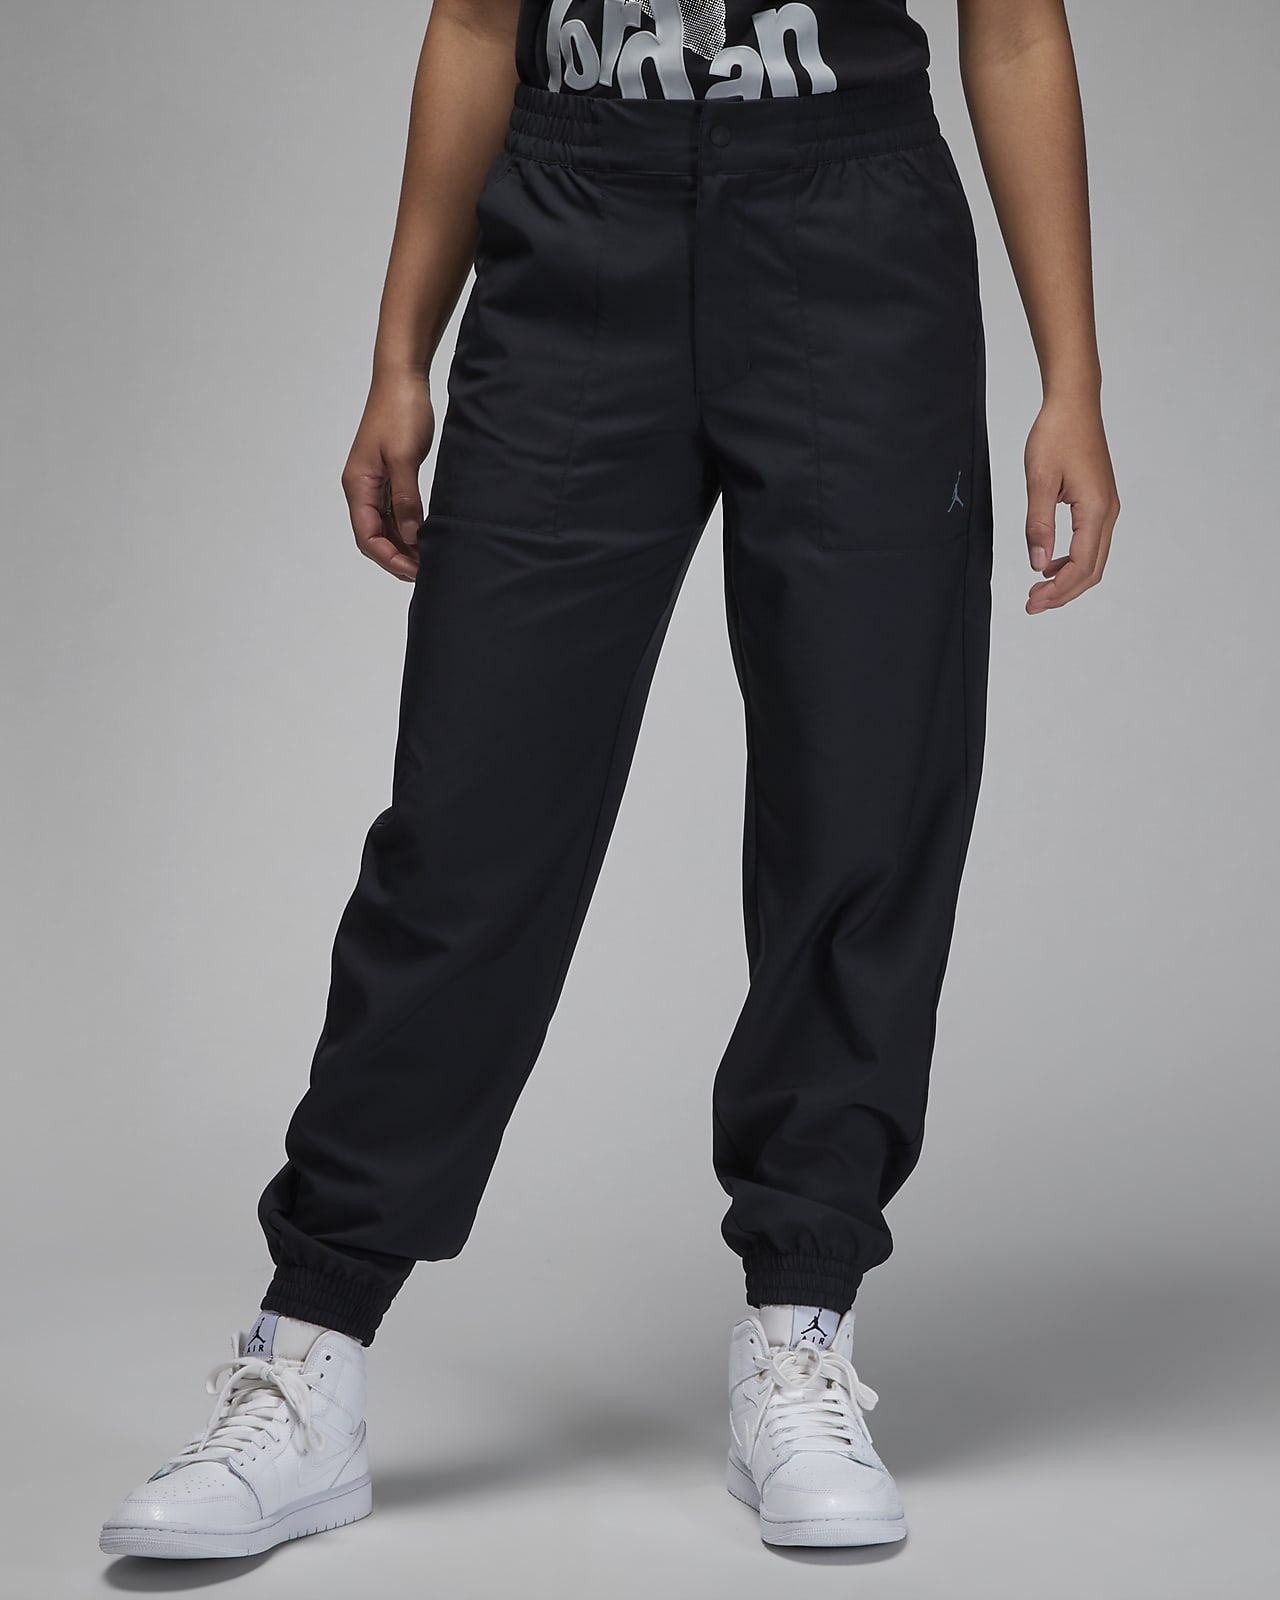 Nike Womens Trend Woven Pants - Black